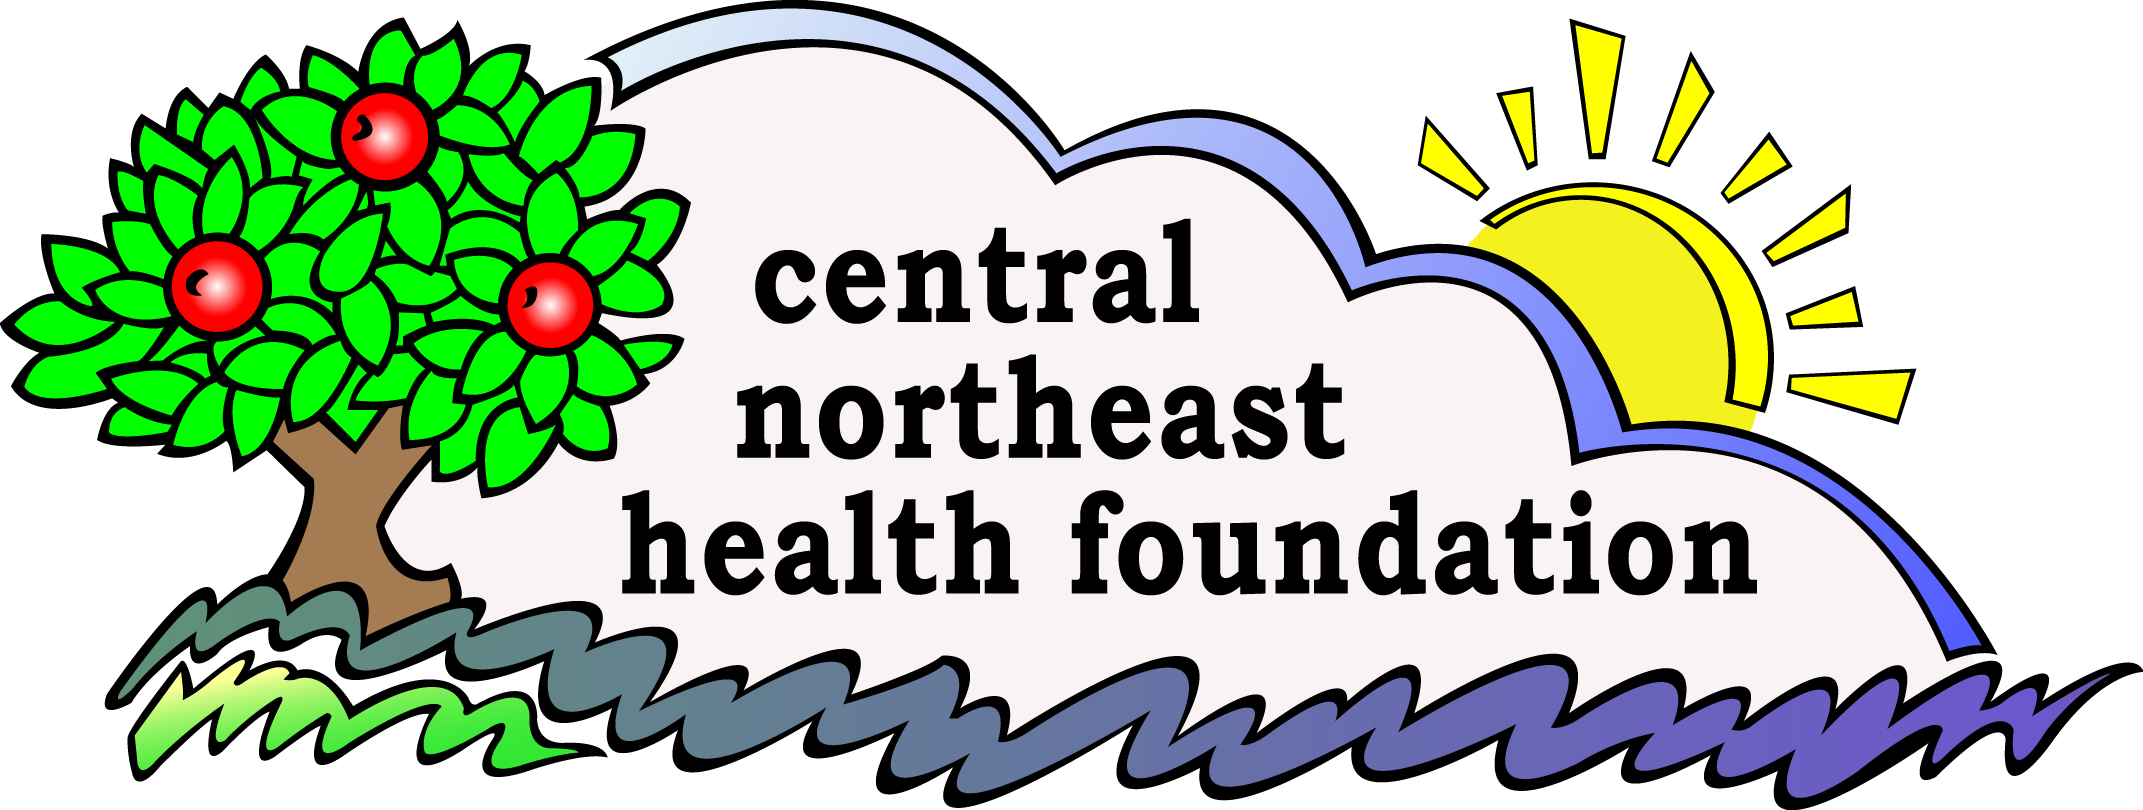 Central Northeast Health Foundation